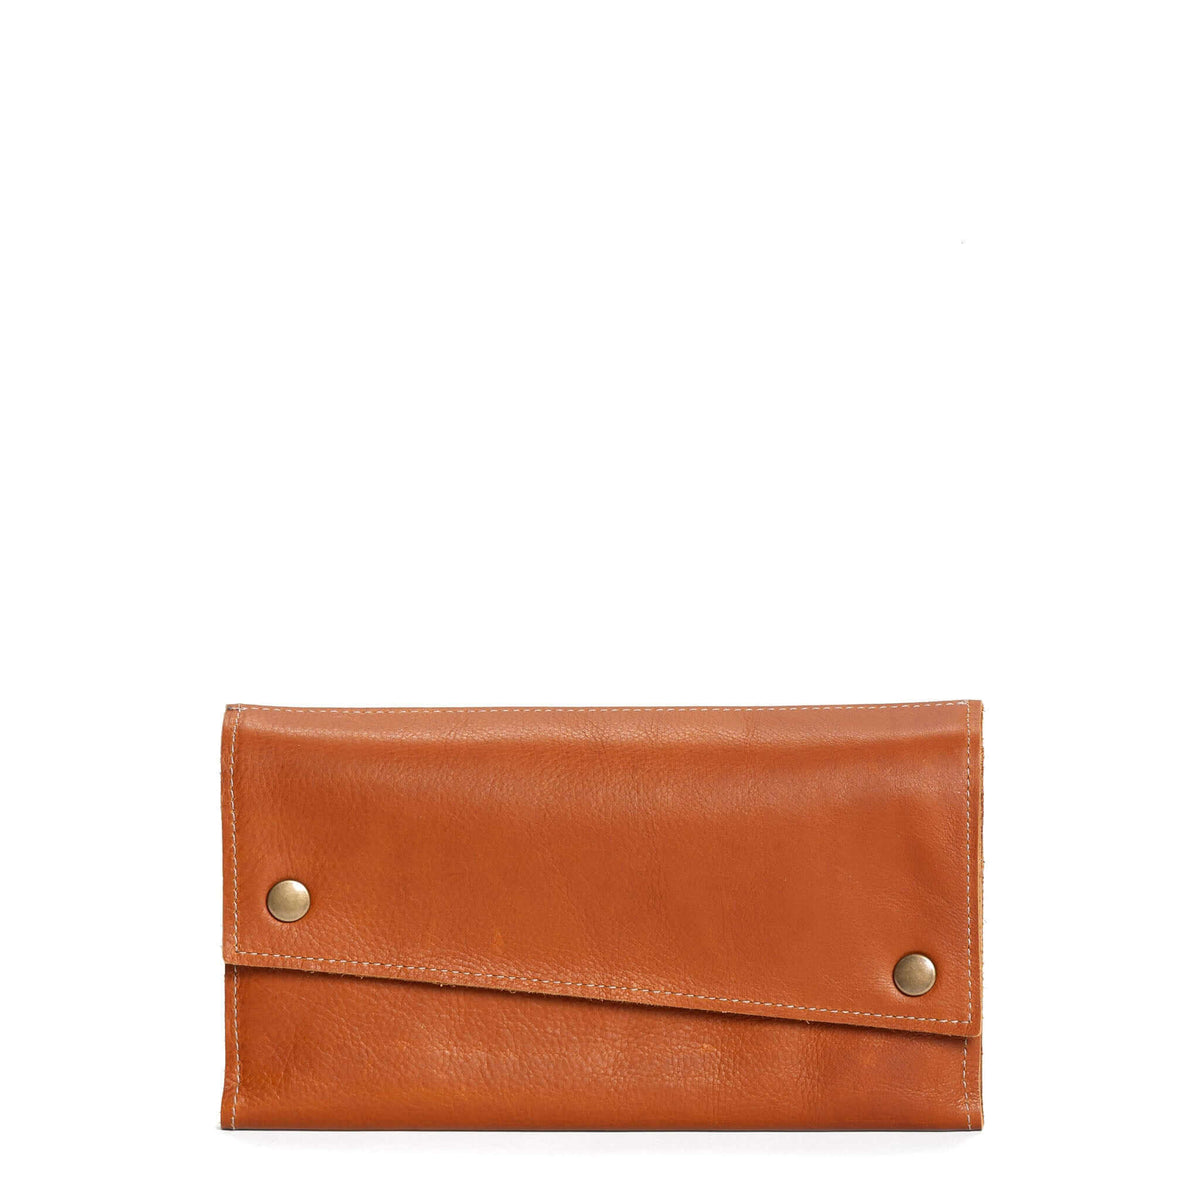 Leather Tri-fold Wallet - Rust - Brynn Capella, leather accessories, usa